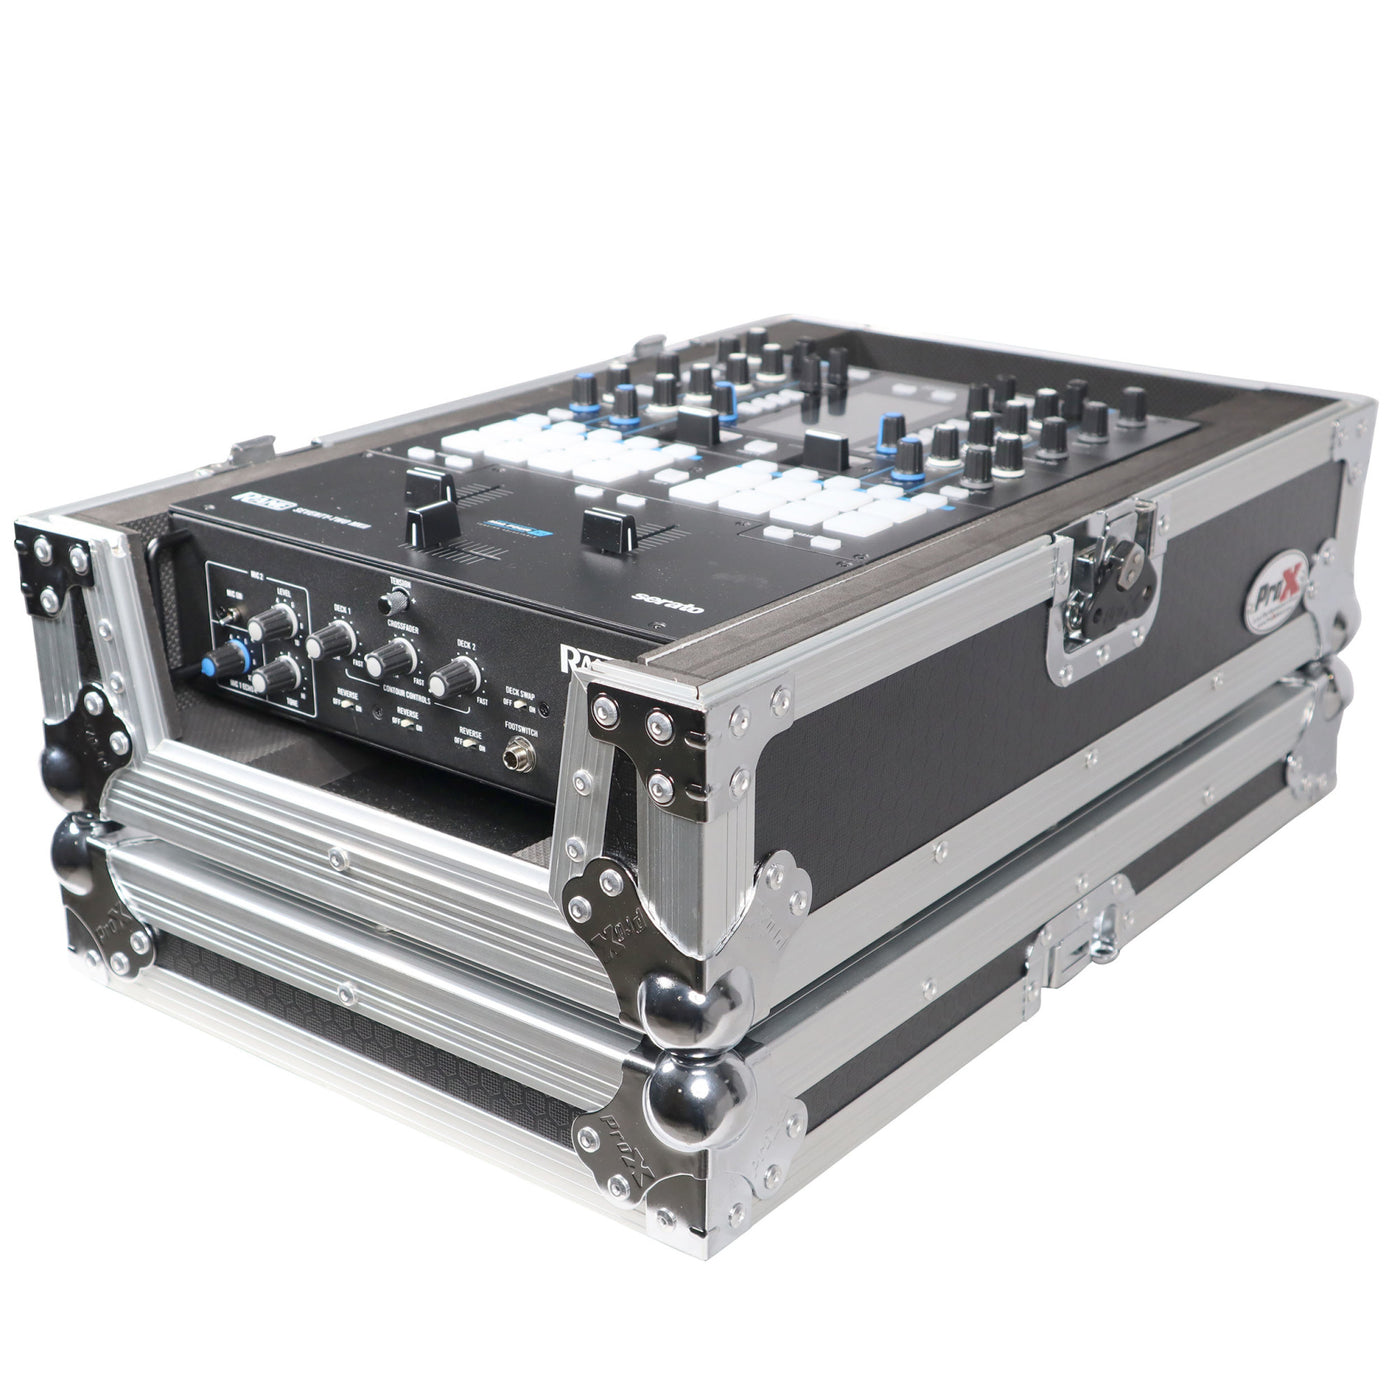 ProX XS-RANE72 Flight Case for Rane 72 & Rane 77 DJ Mixer, Pro Audio Gear, Equipment Storage